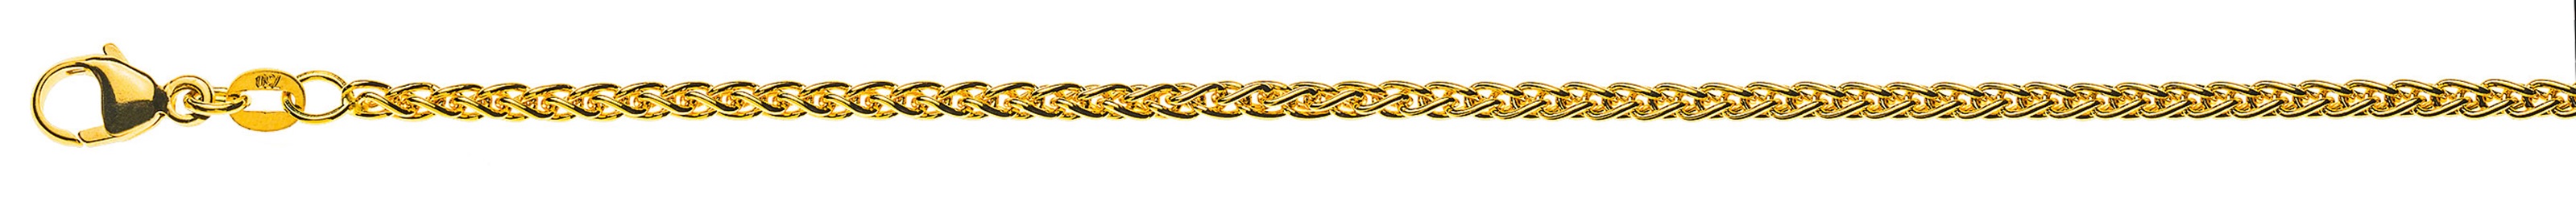 AURONOS Prestige Necklace yellow gold 18K cable chain 42cm 2.5mm